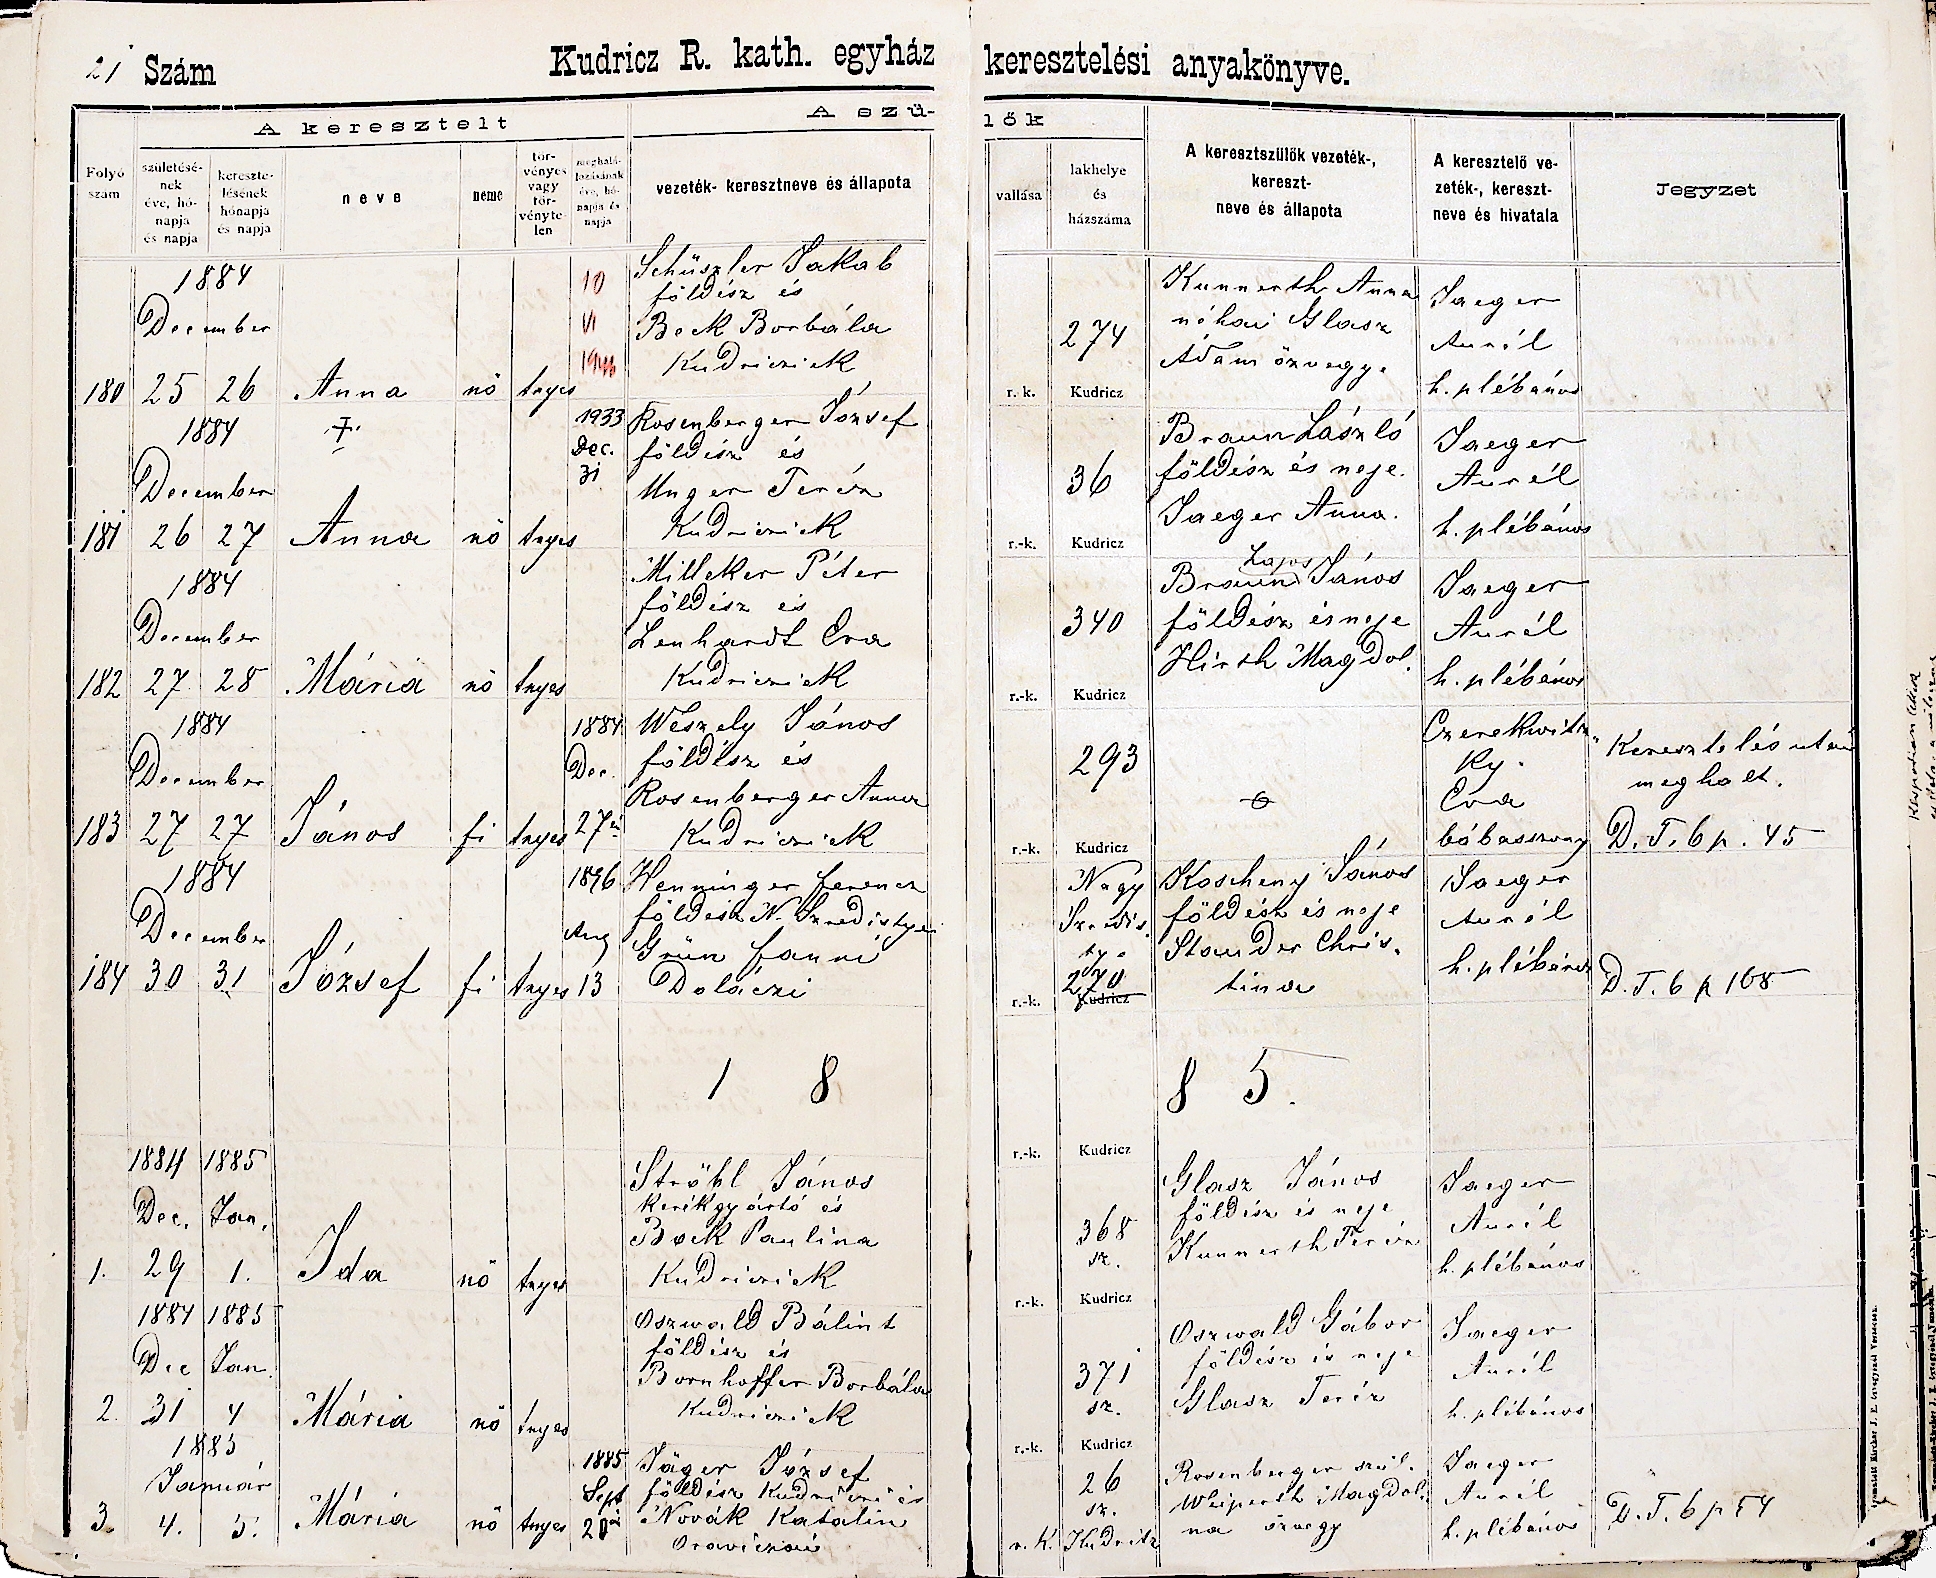 images/church_records/BIRTHS/1884-1899B/1884-1885/021